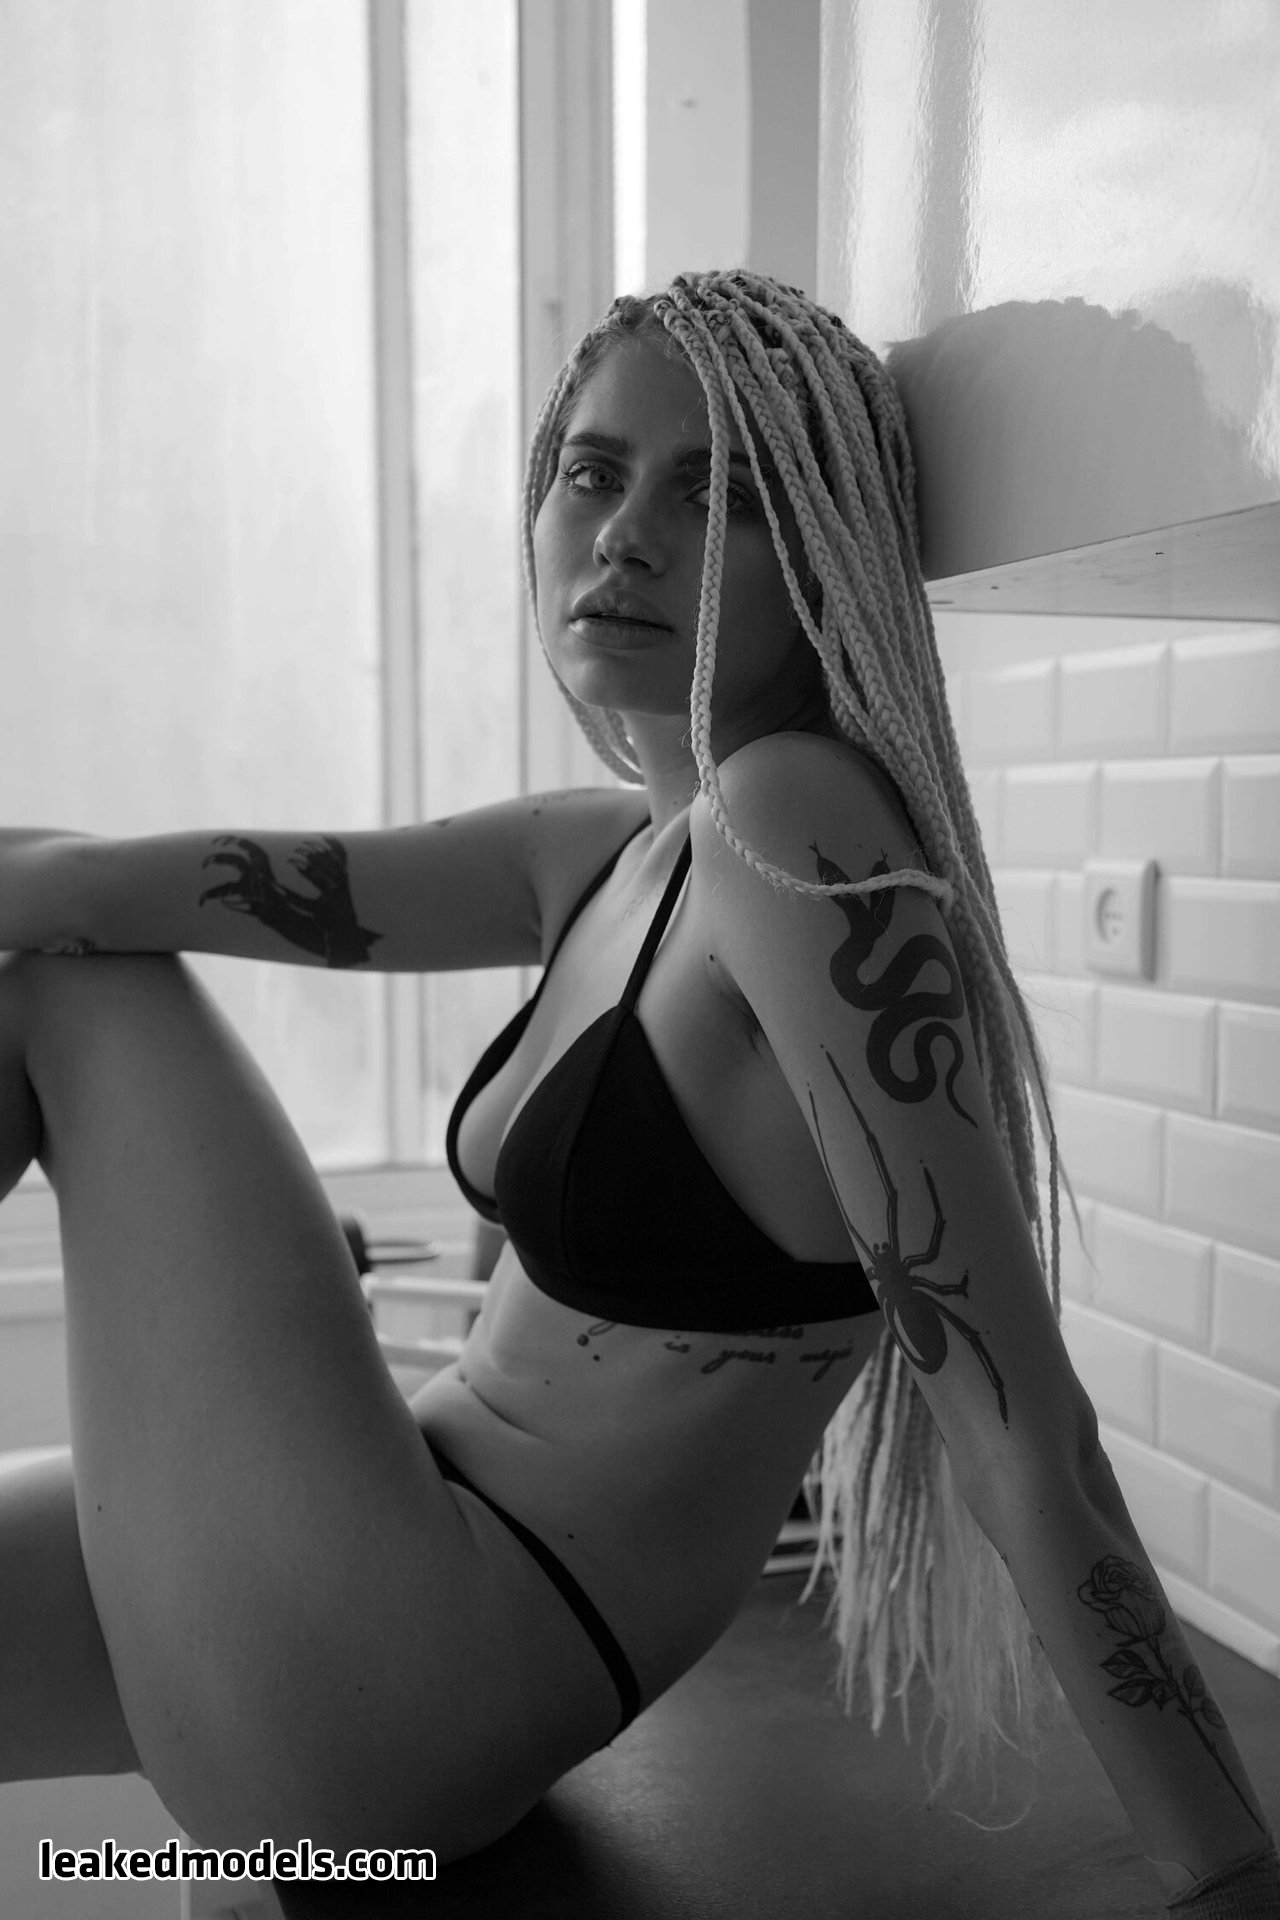 regina rose tubarg leaked nude leakedmodels.com 0004 - Regina Rose Tubarg Instagram Sexy Leaks (25 Photos)